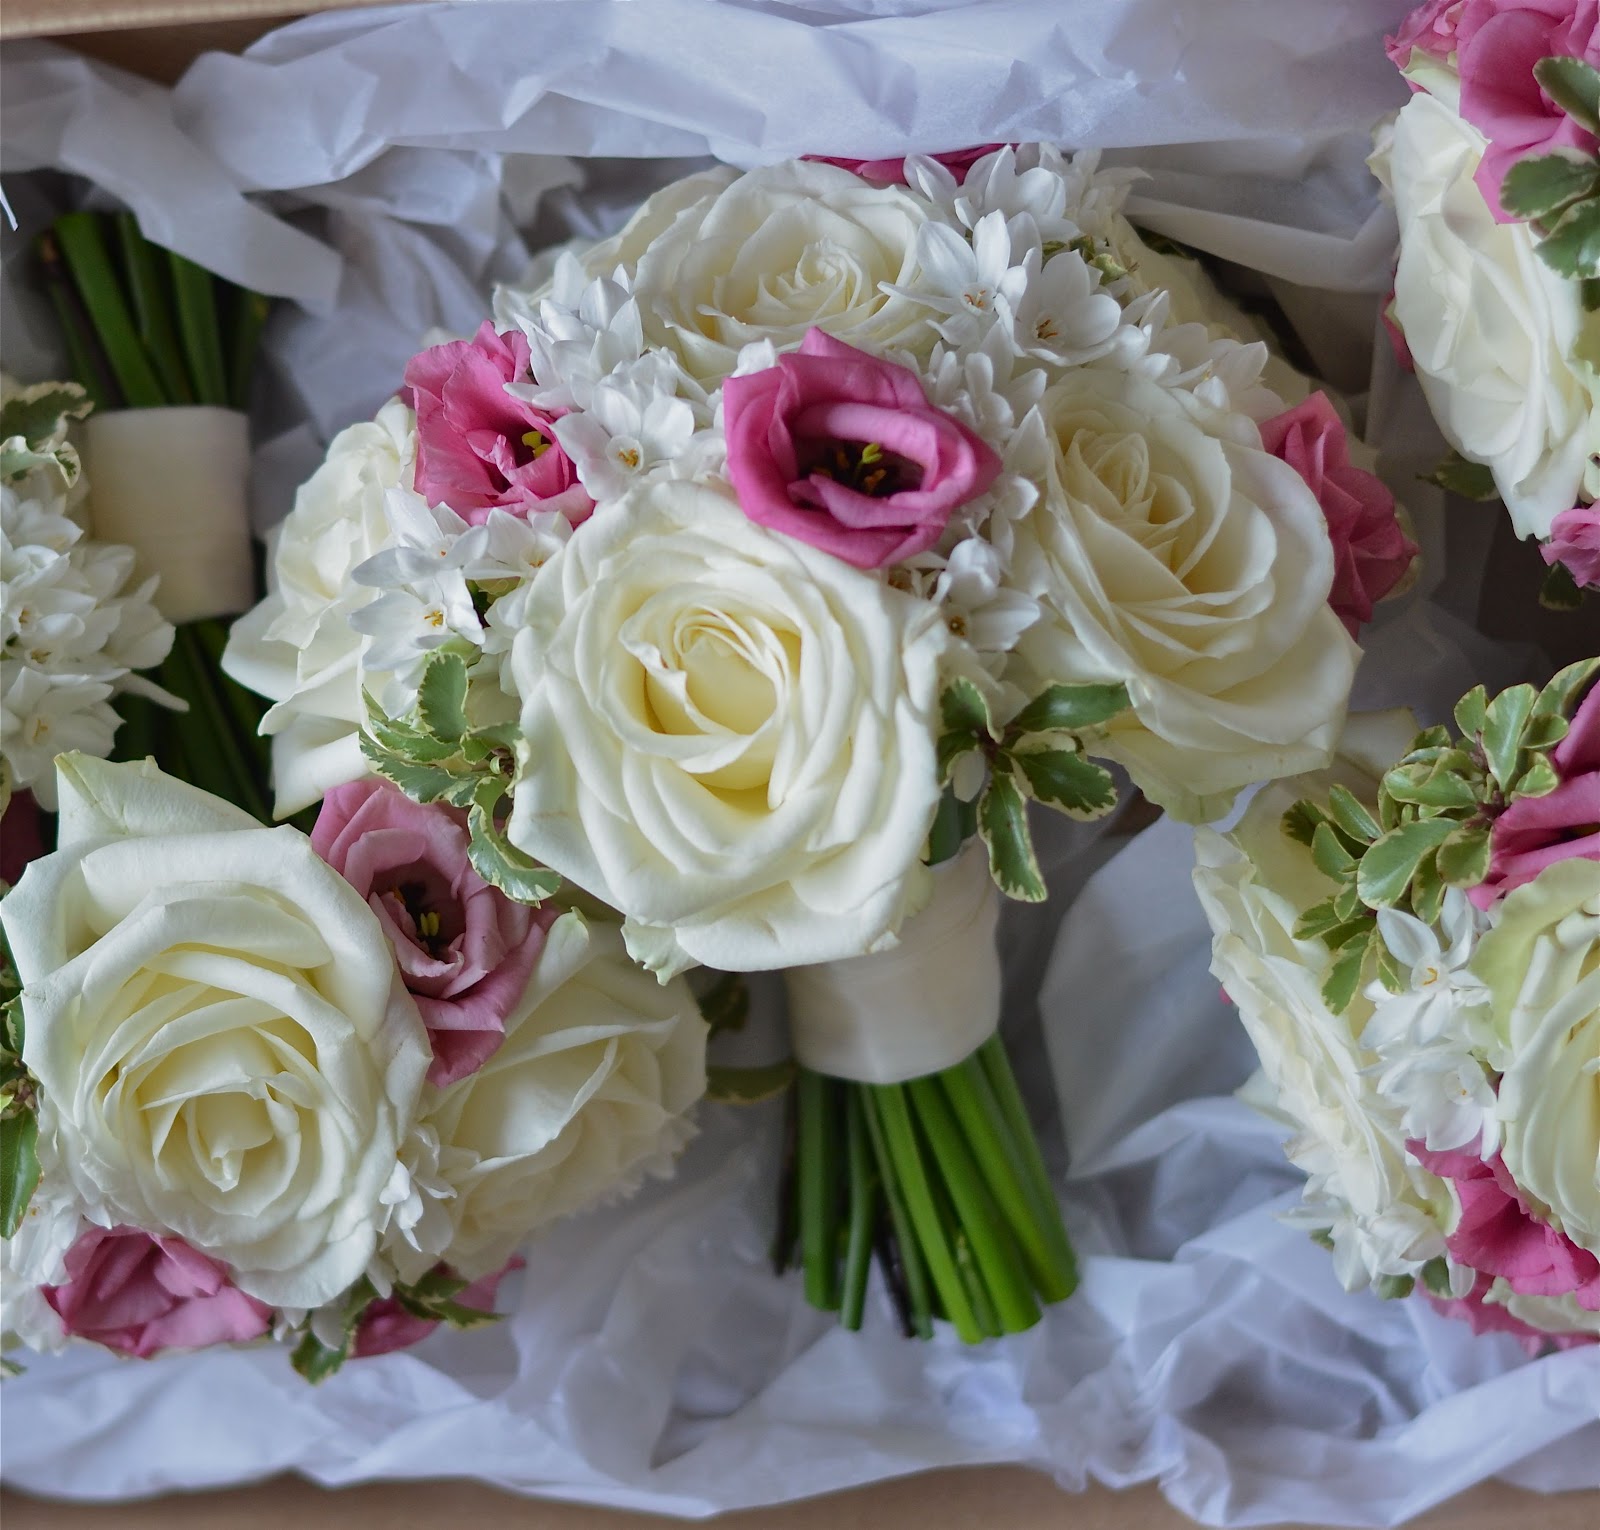 Wedding Flowers Blog: Jade's Classic Pink and White Wedding Flowers ...